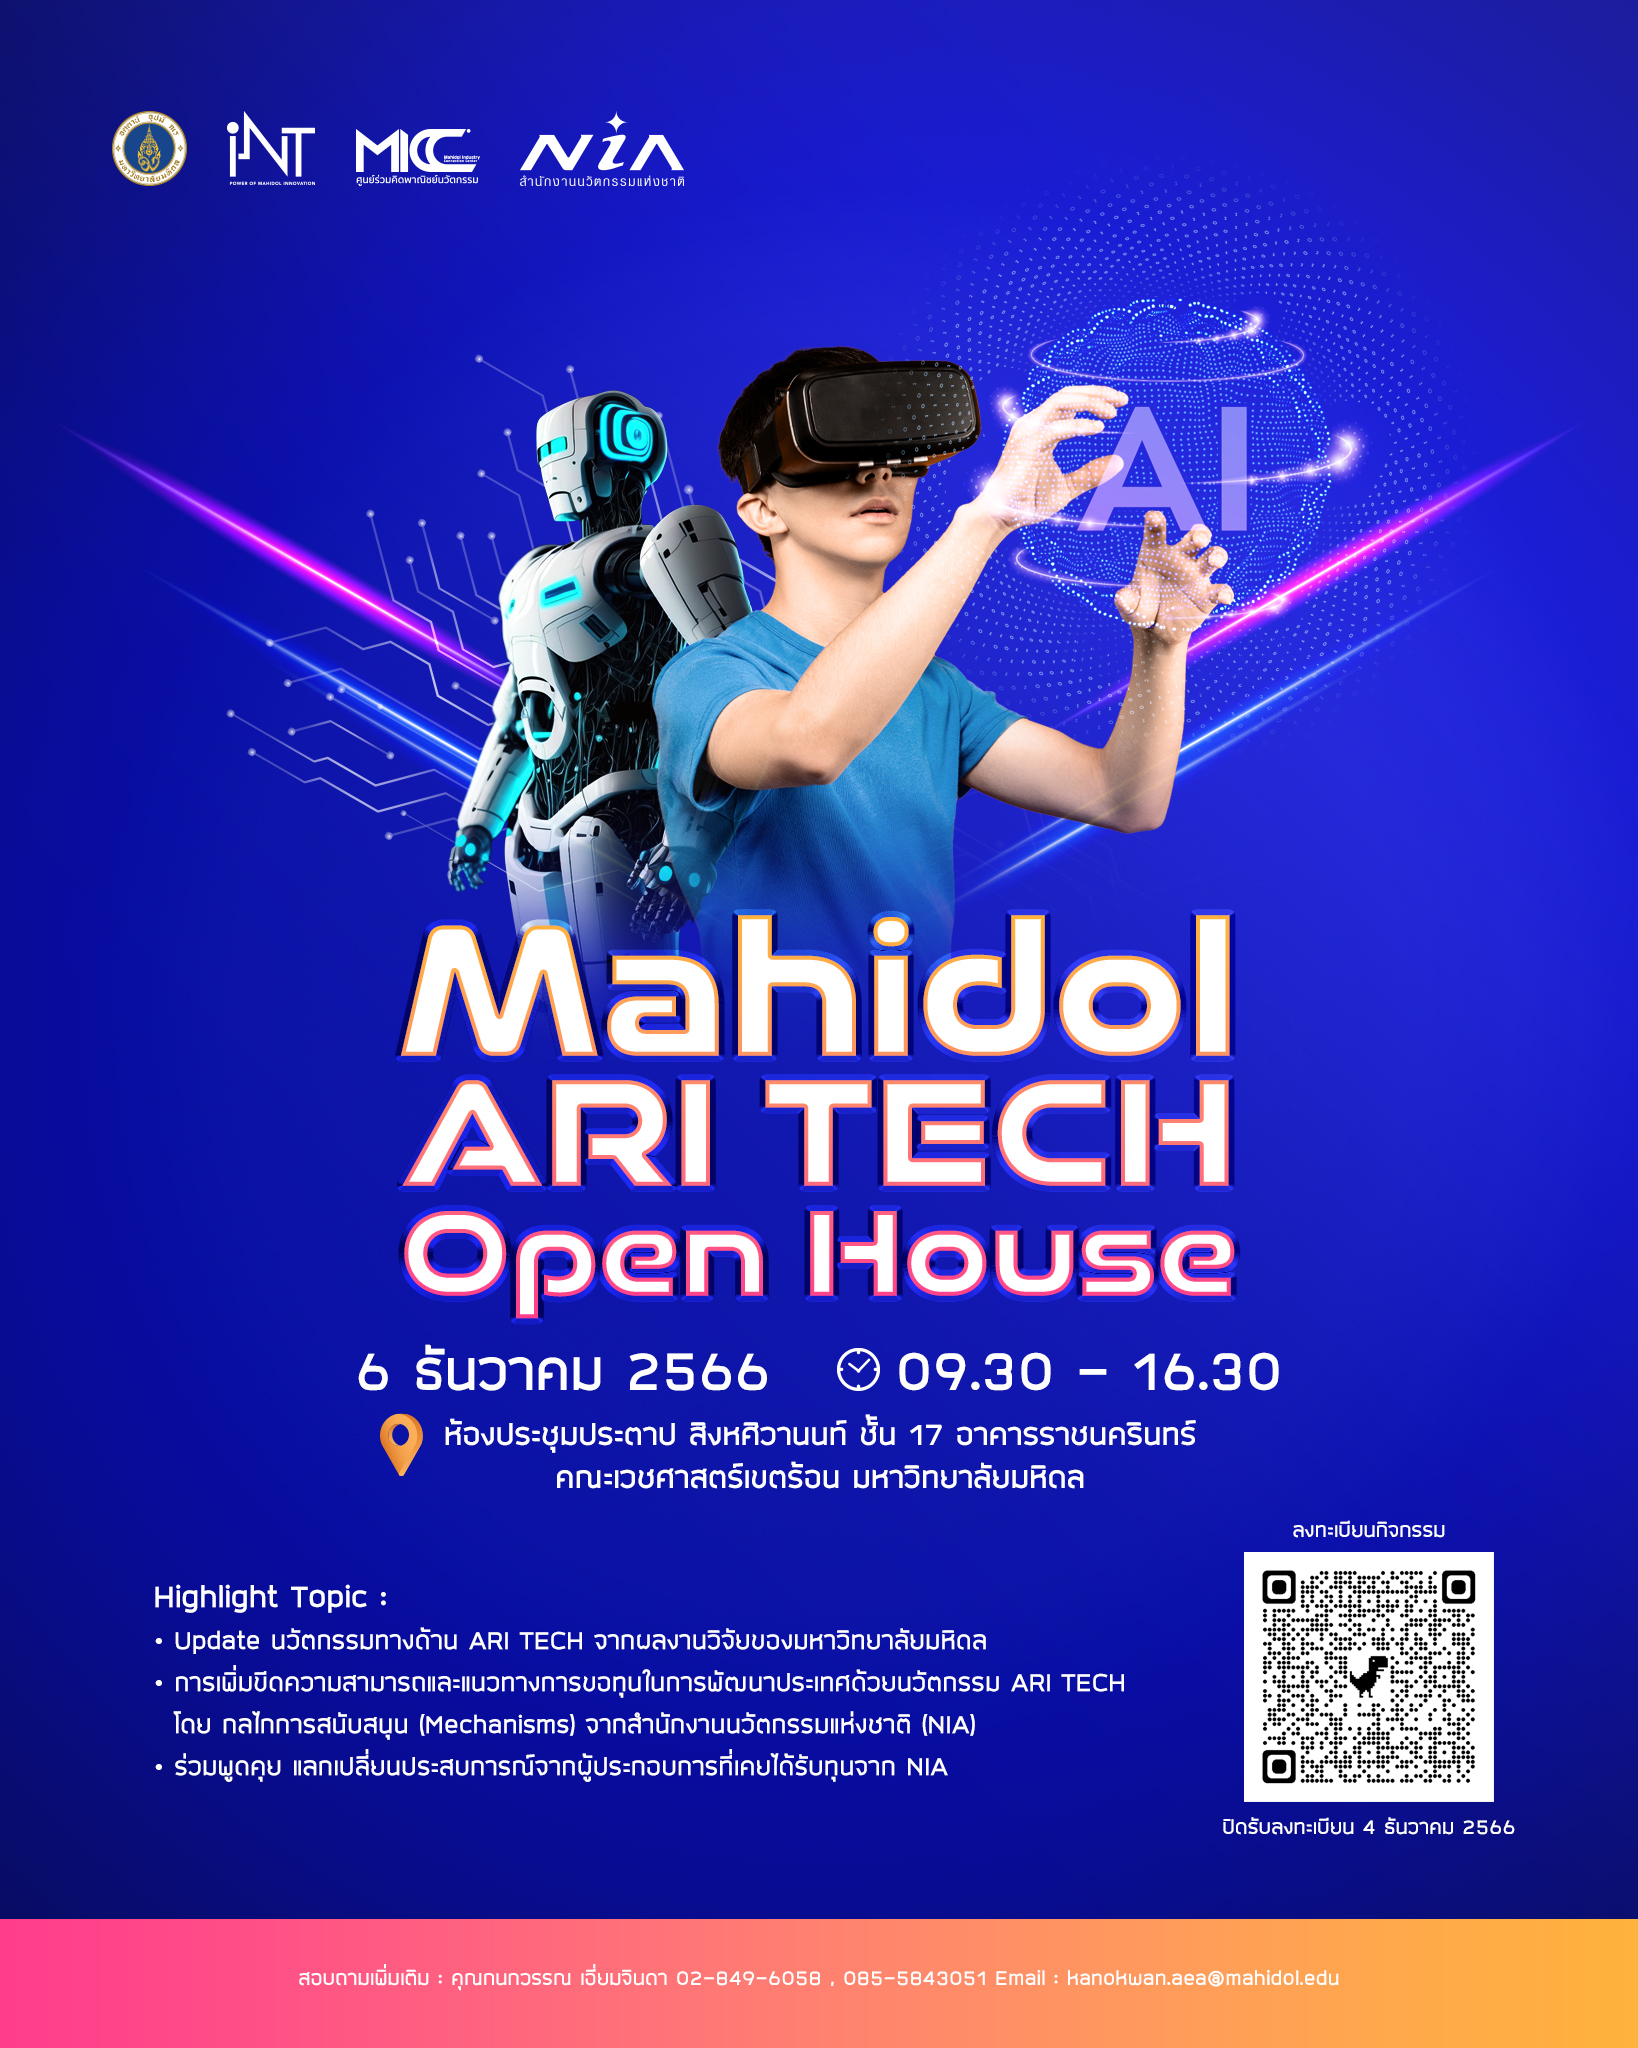 Mahidol ARI TECH Open House